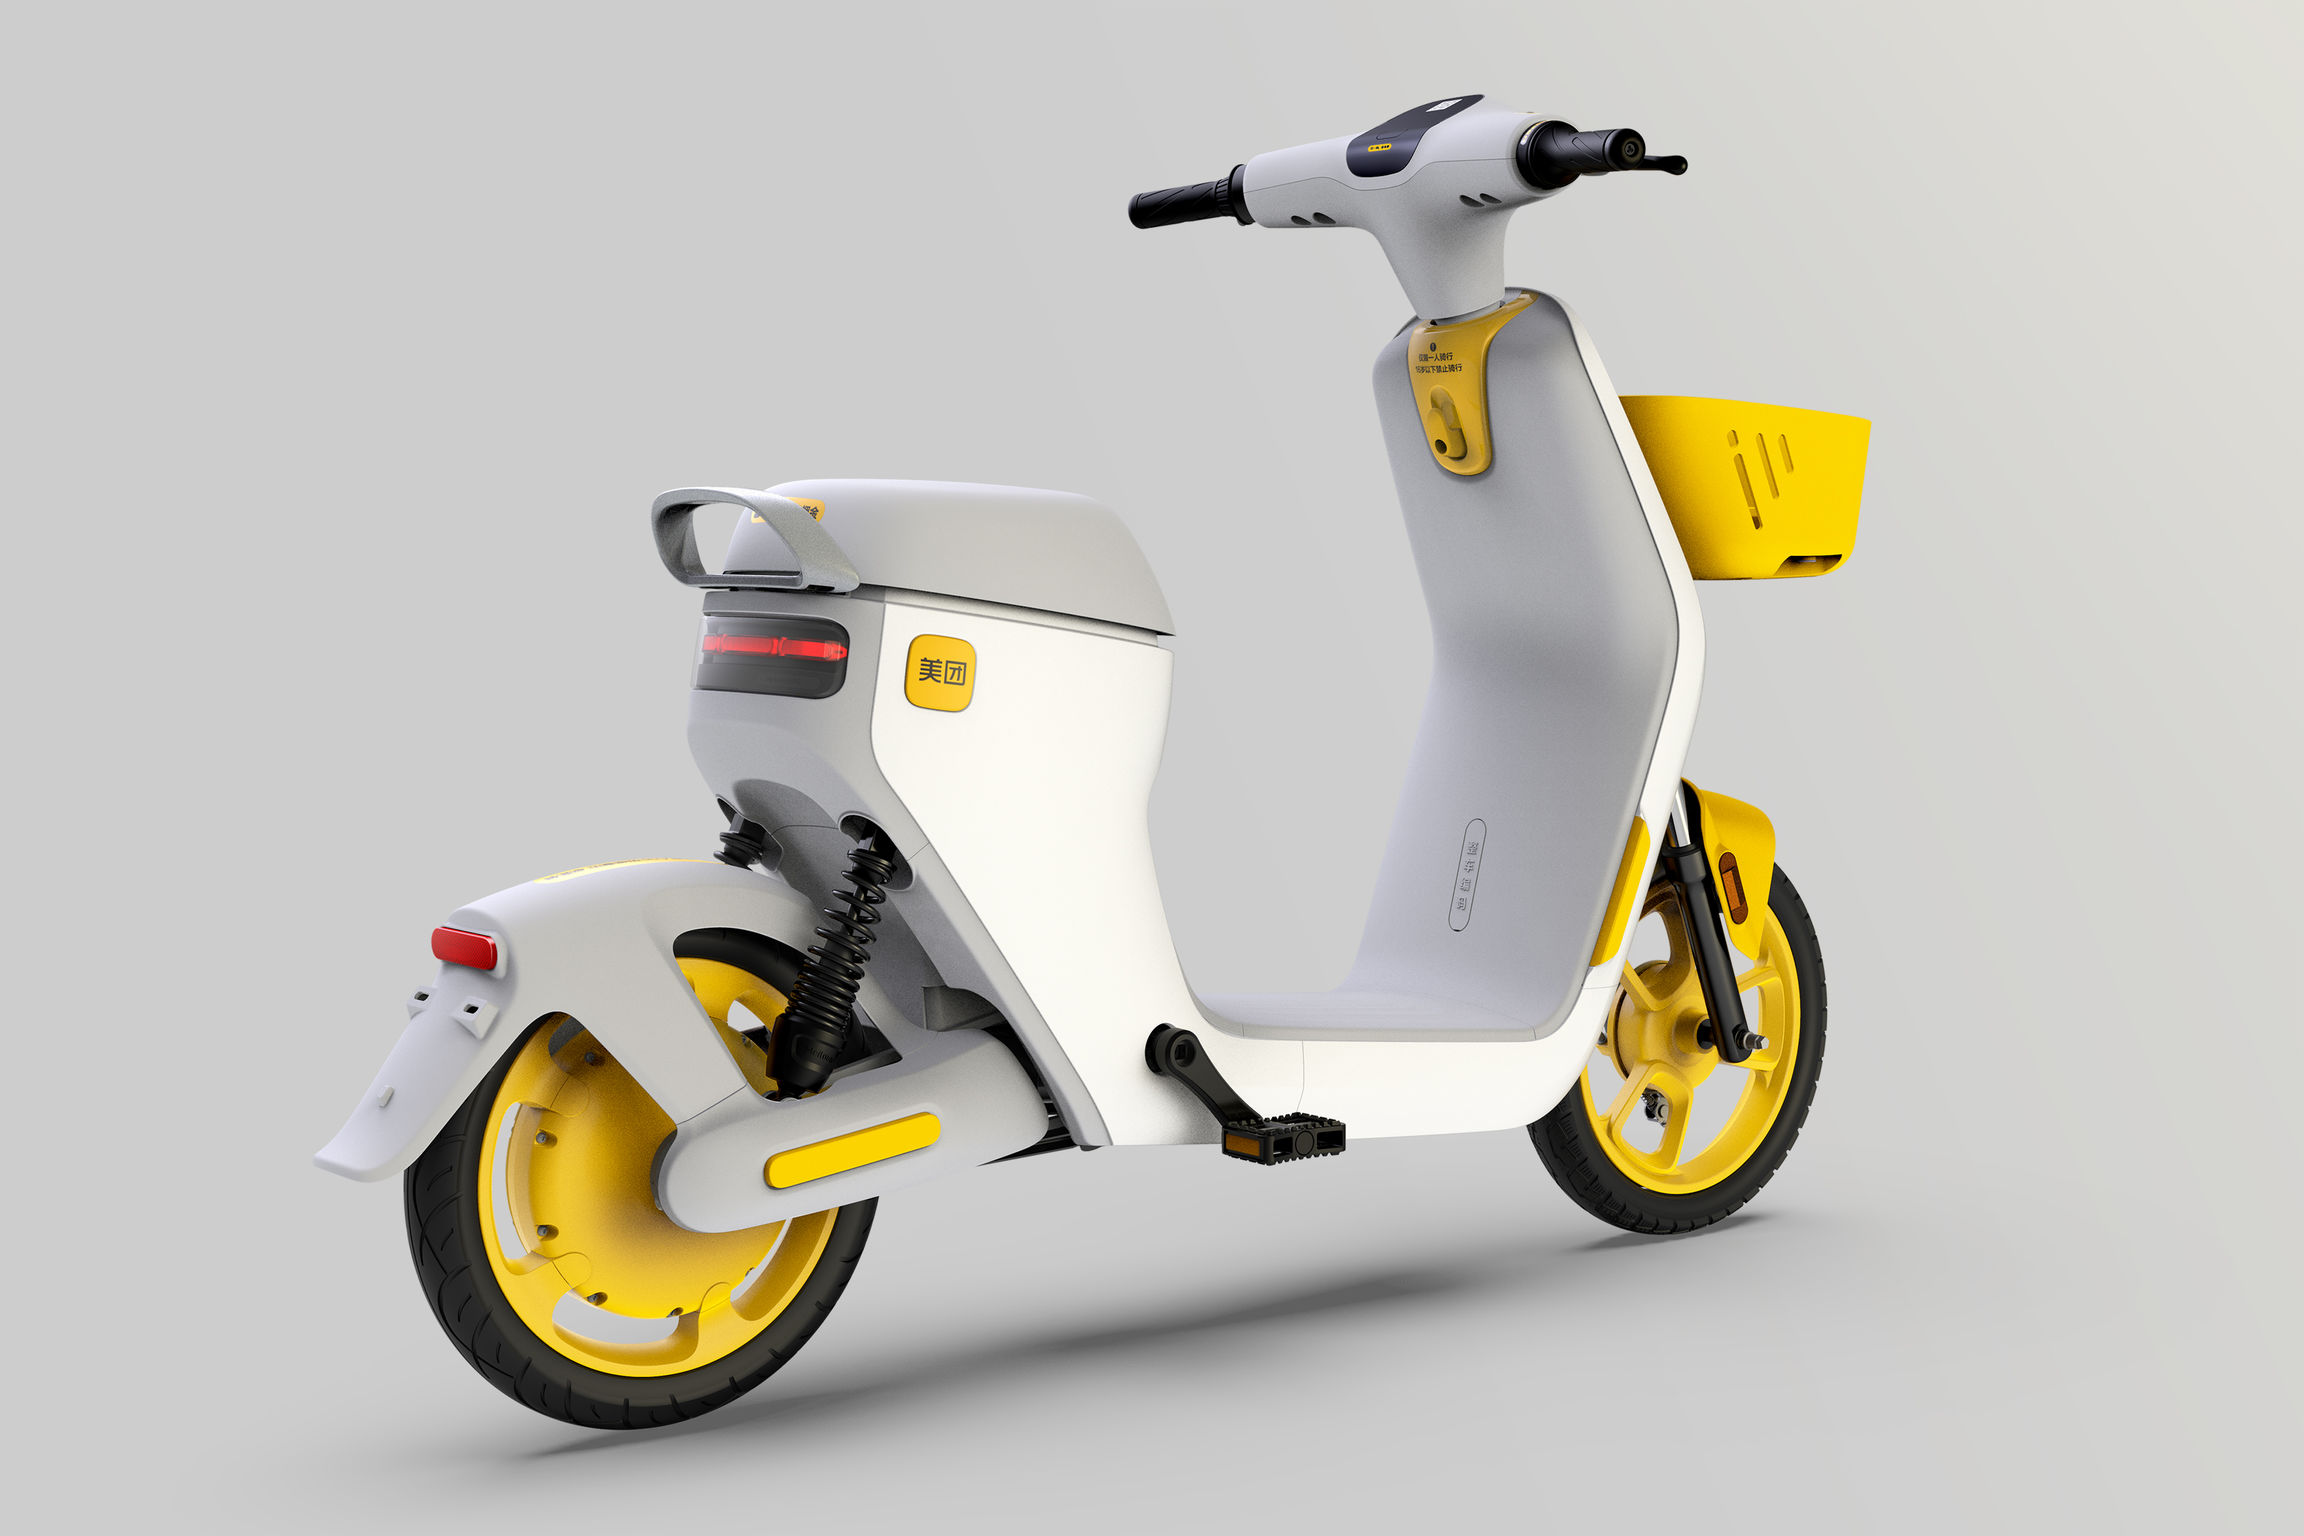 Meituan X1 Sharing E-Scooter